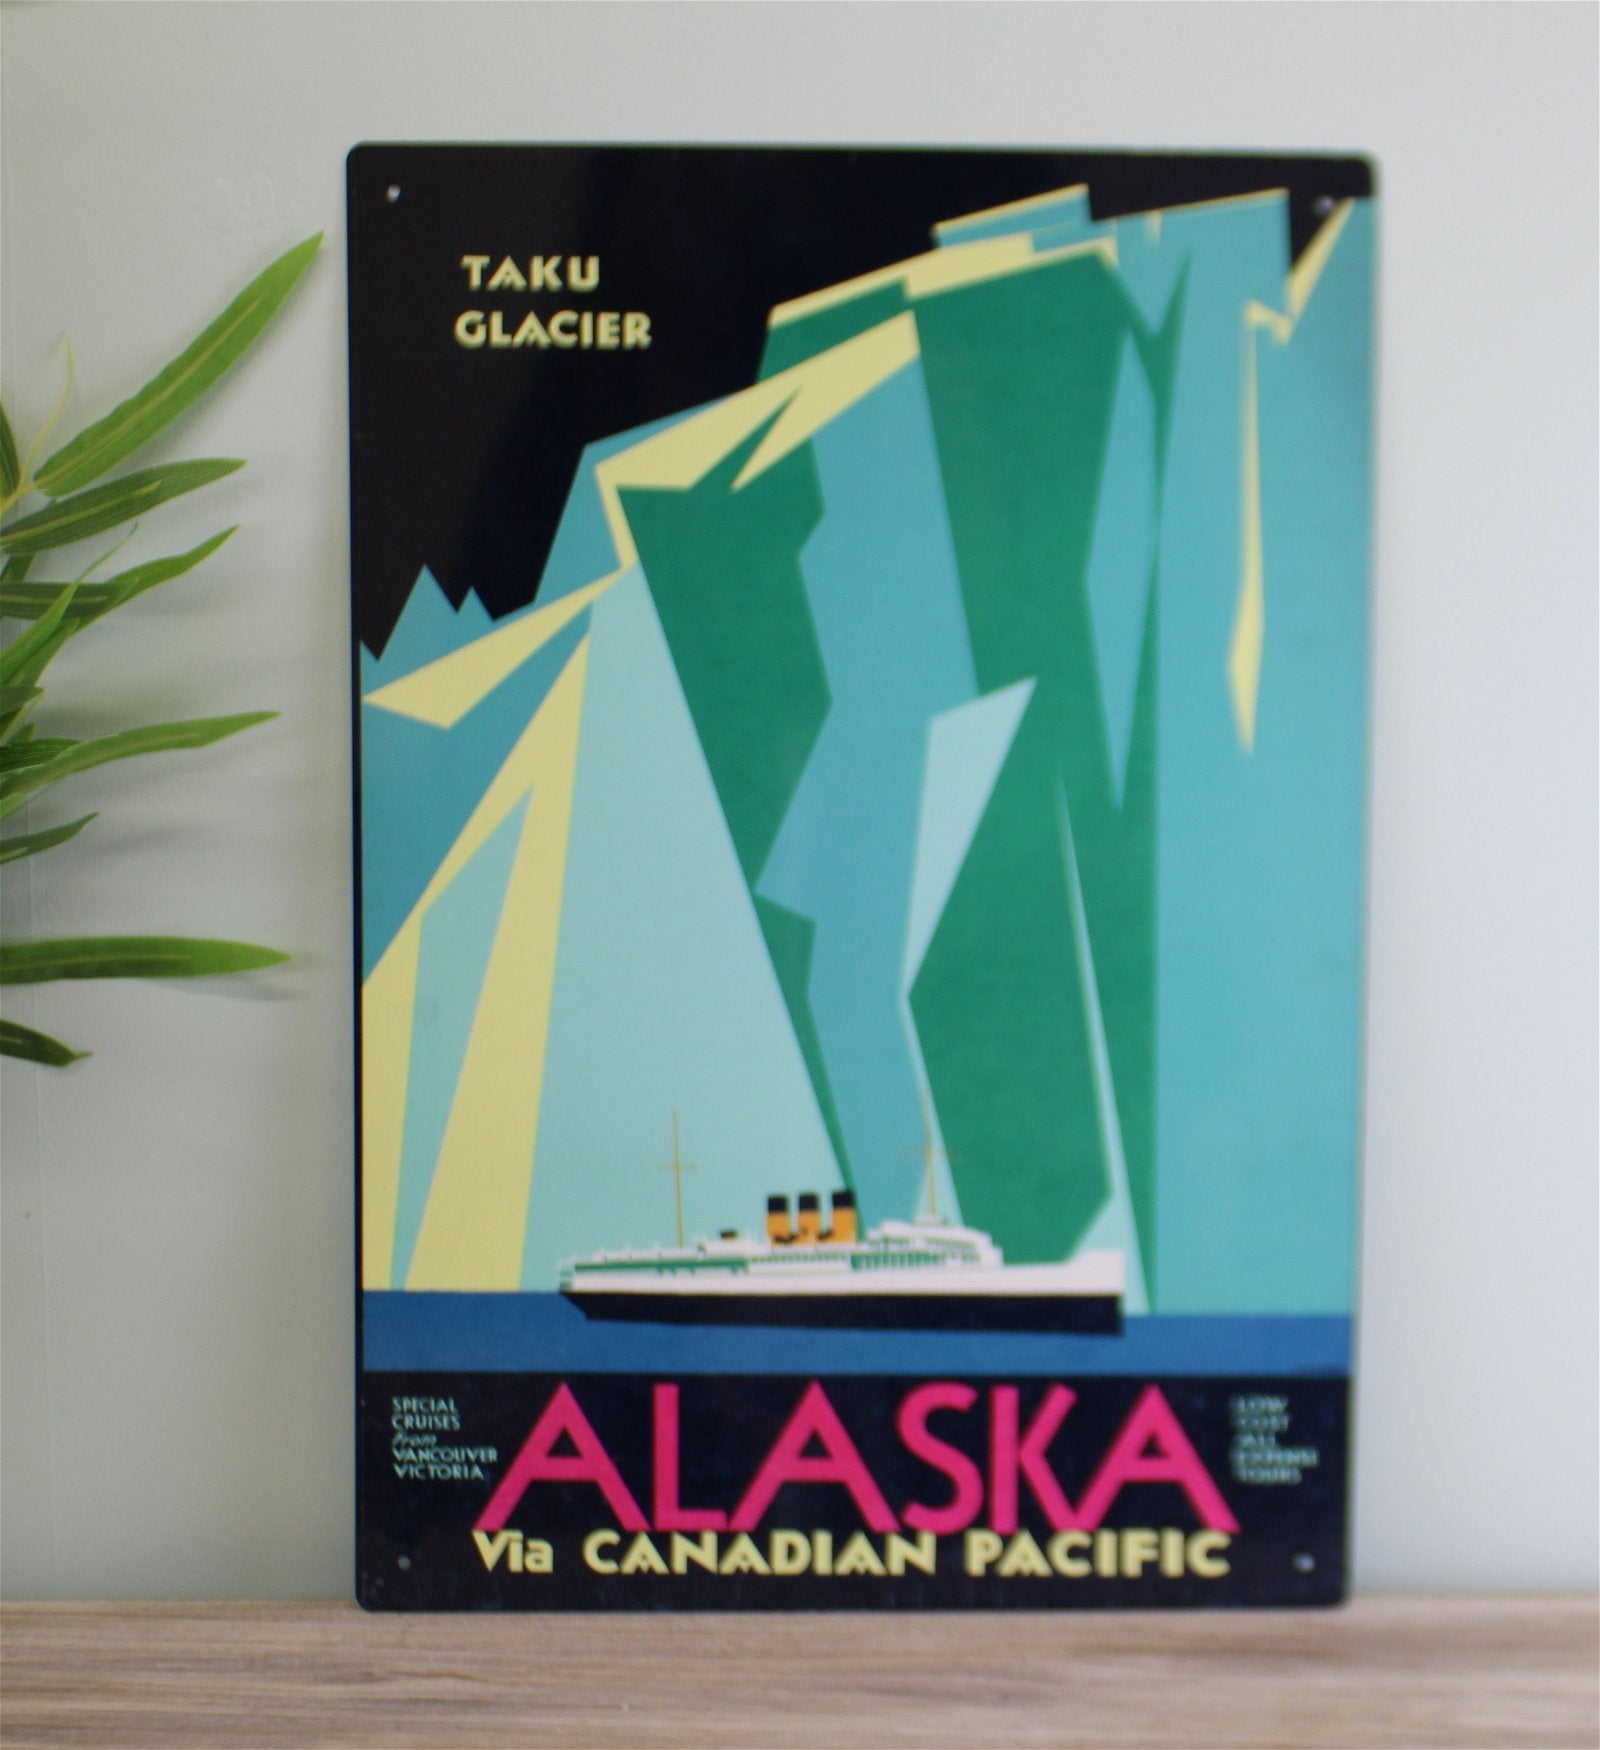 Vintage Metal Sign - Retro Advertising - Alaska Via Canadian Pacific Travel - Kaftan direct